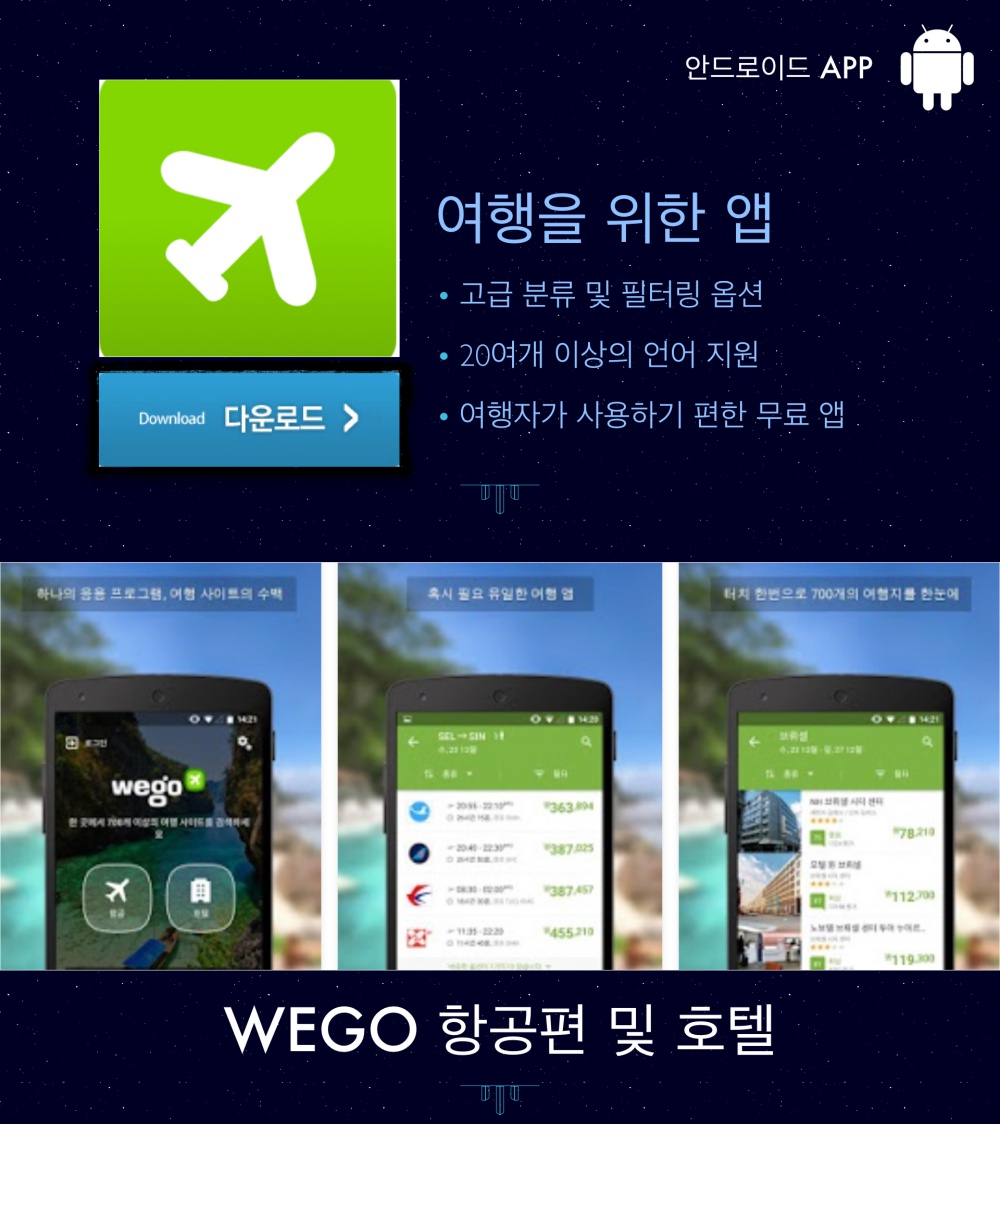 https://play.google.com/store/apps/details?id=com.wego.android